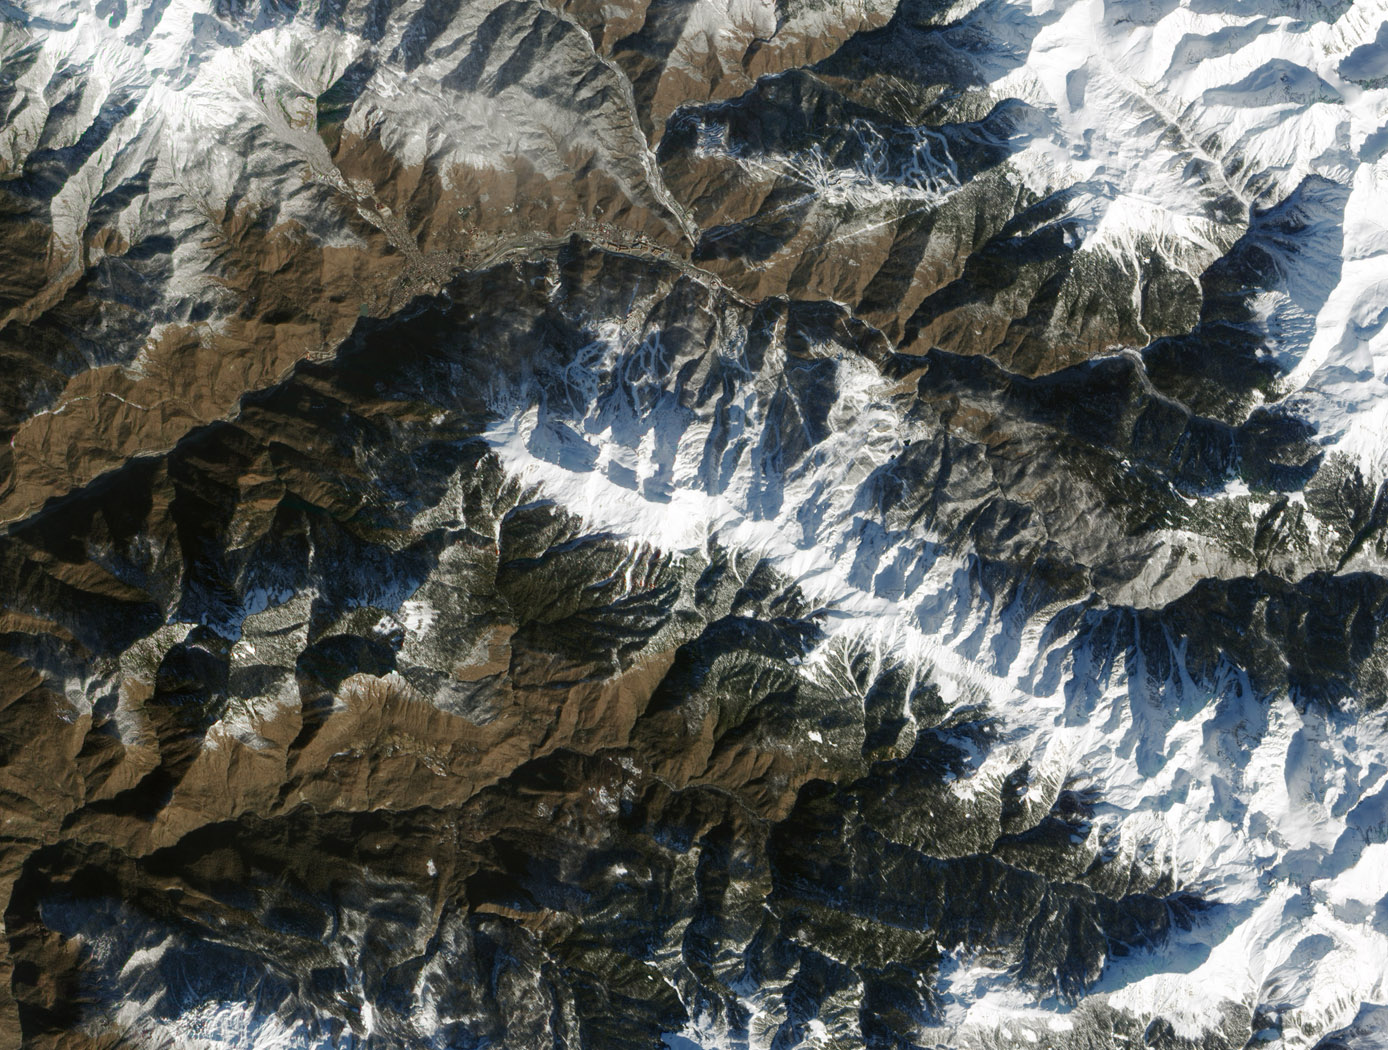 Skiing Sochi, Credit: NASA Earth Observatory